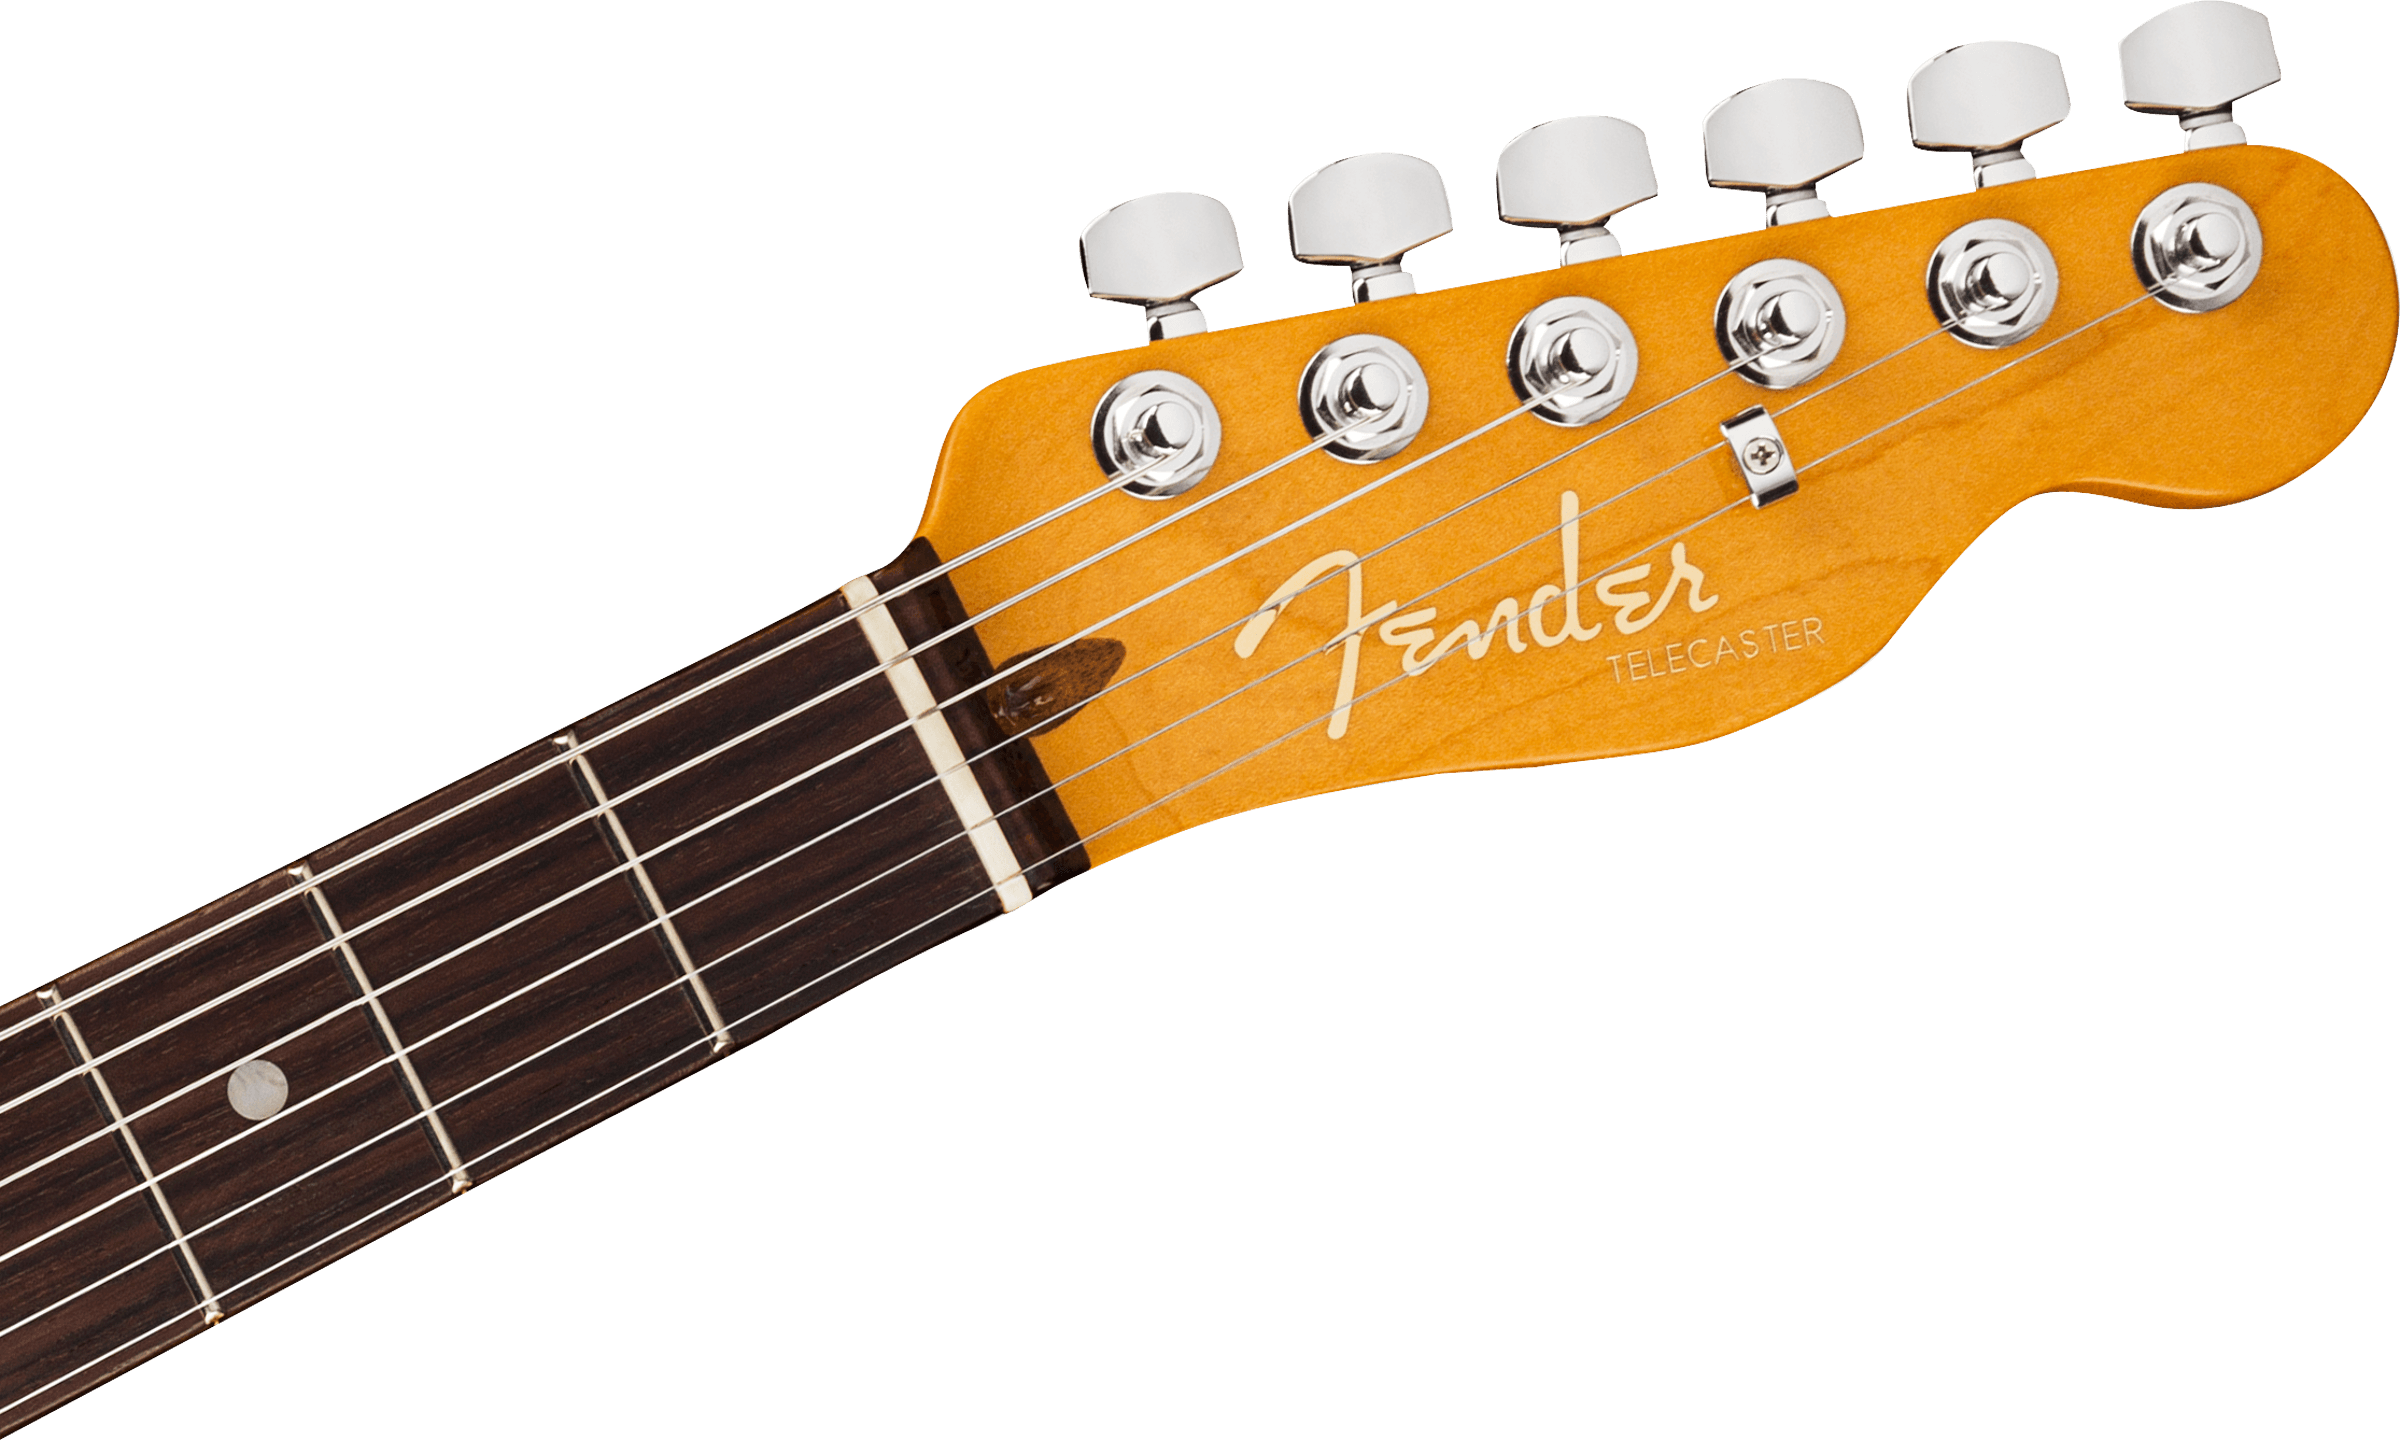 Fender American Ultra Telecaster®, Rosewood Fingerboard, Ultraburst